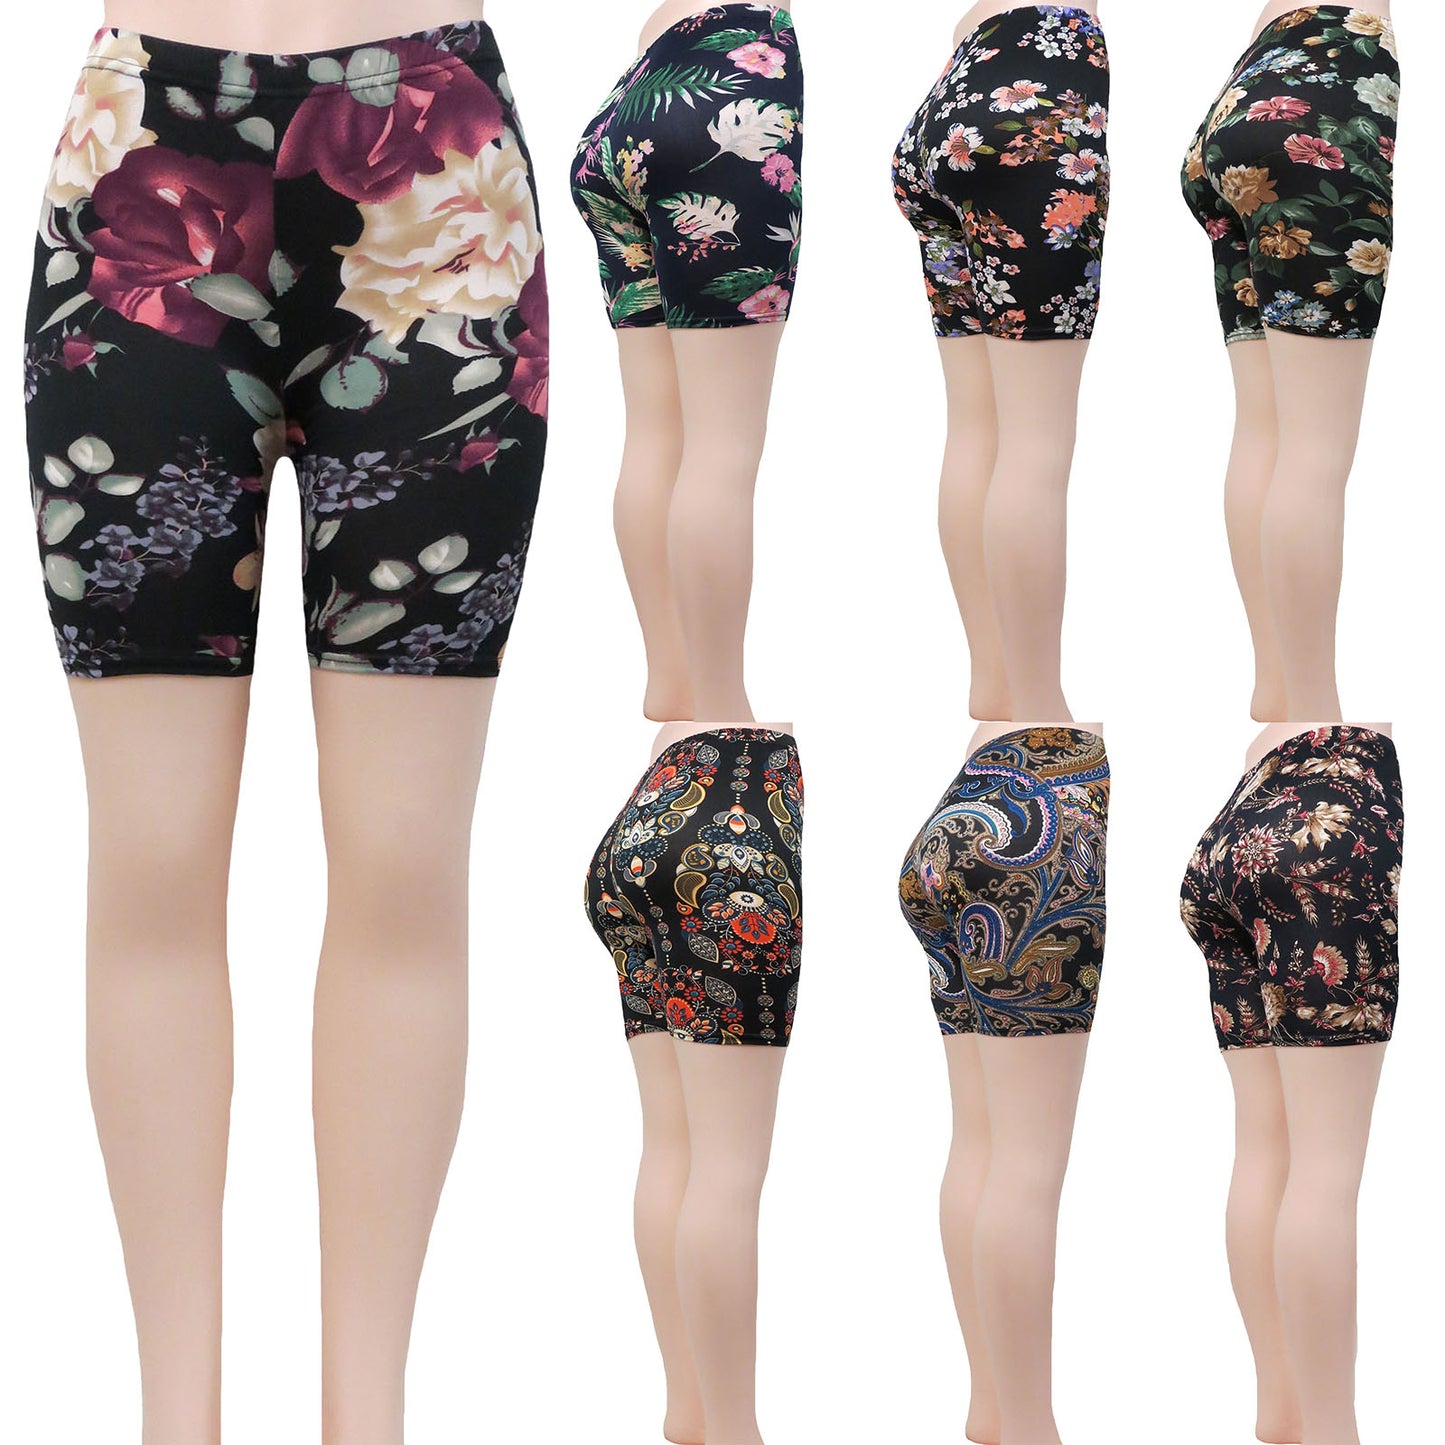 Women's Wholesale Bike Shorts in Bulk Assorted Flower Prints